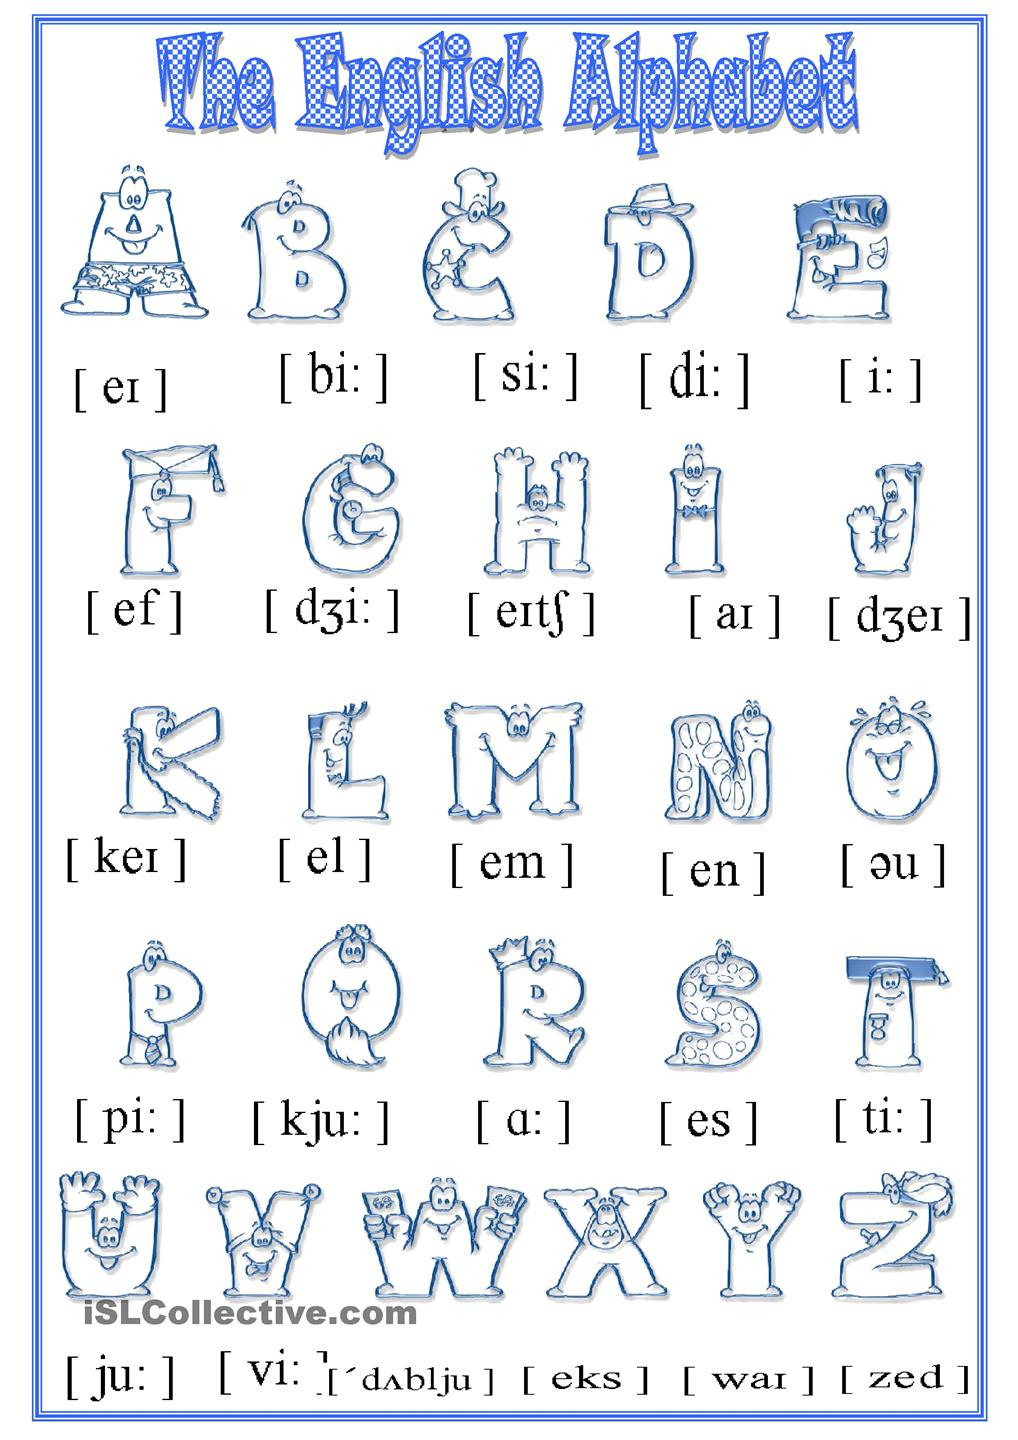 Spanish Alphabet Worksheets Db excel